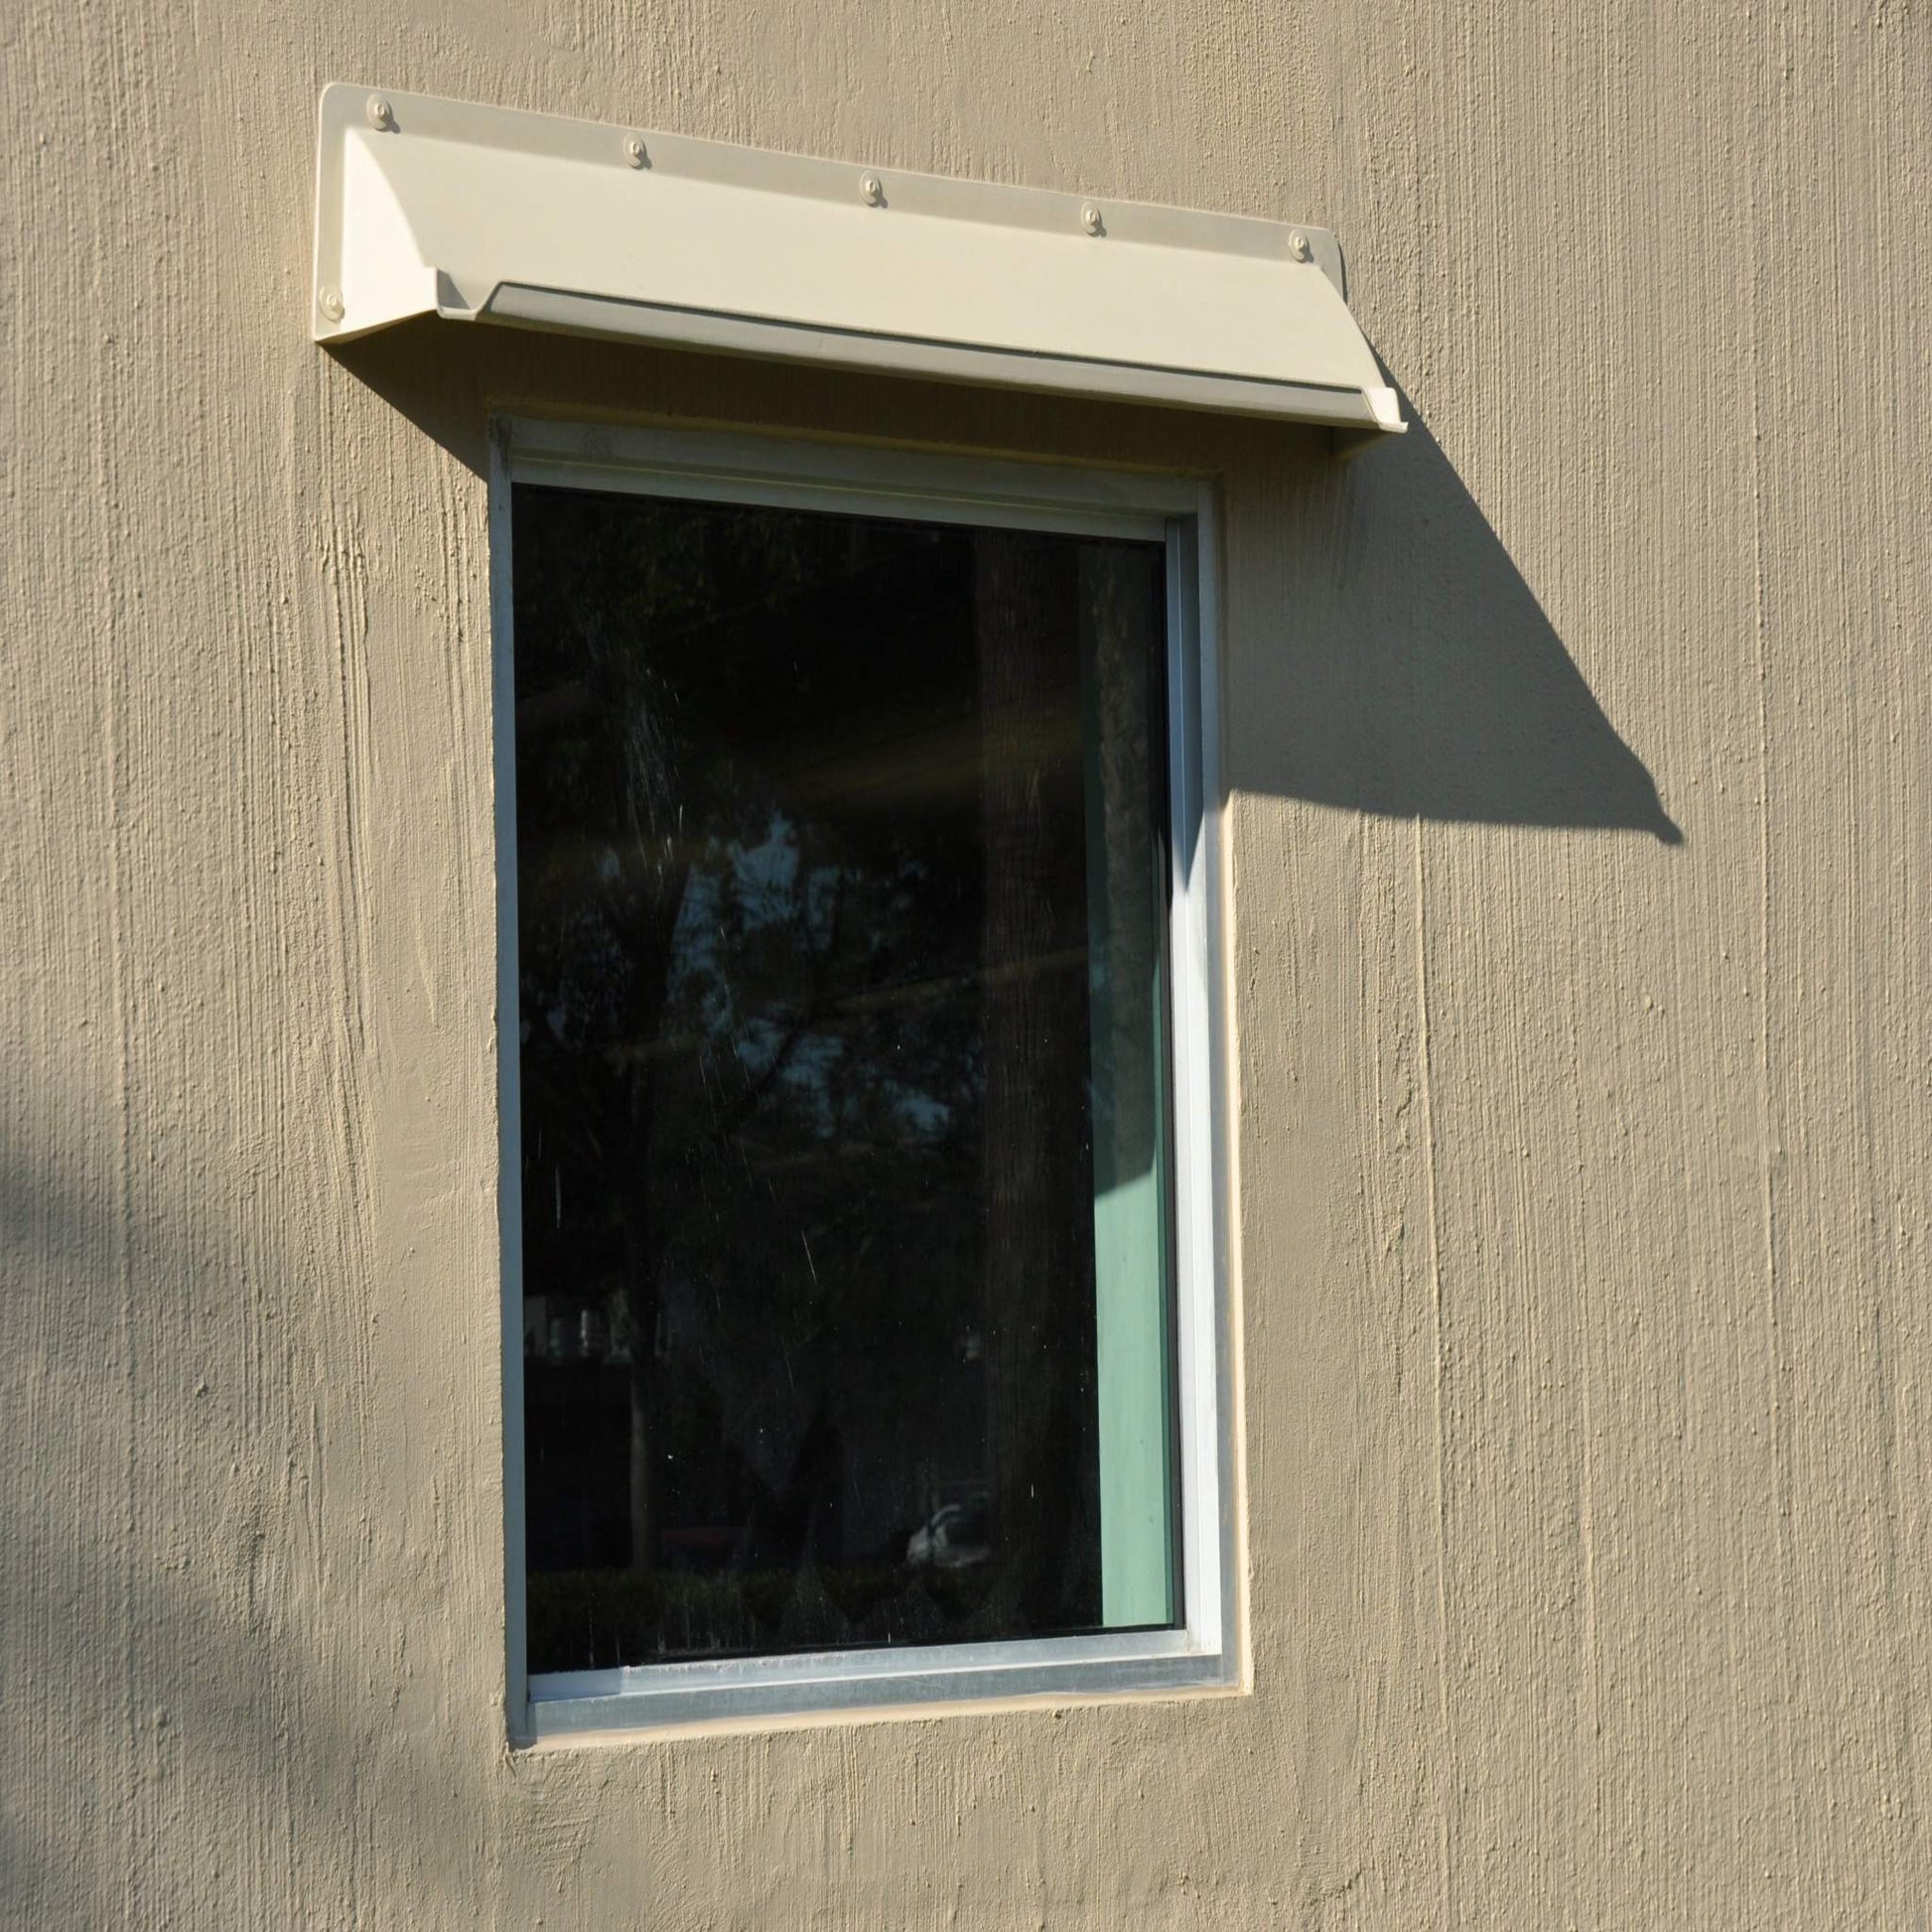 Beige rain diverter mounted above a fixed panel single window in a tilt building.